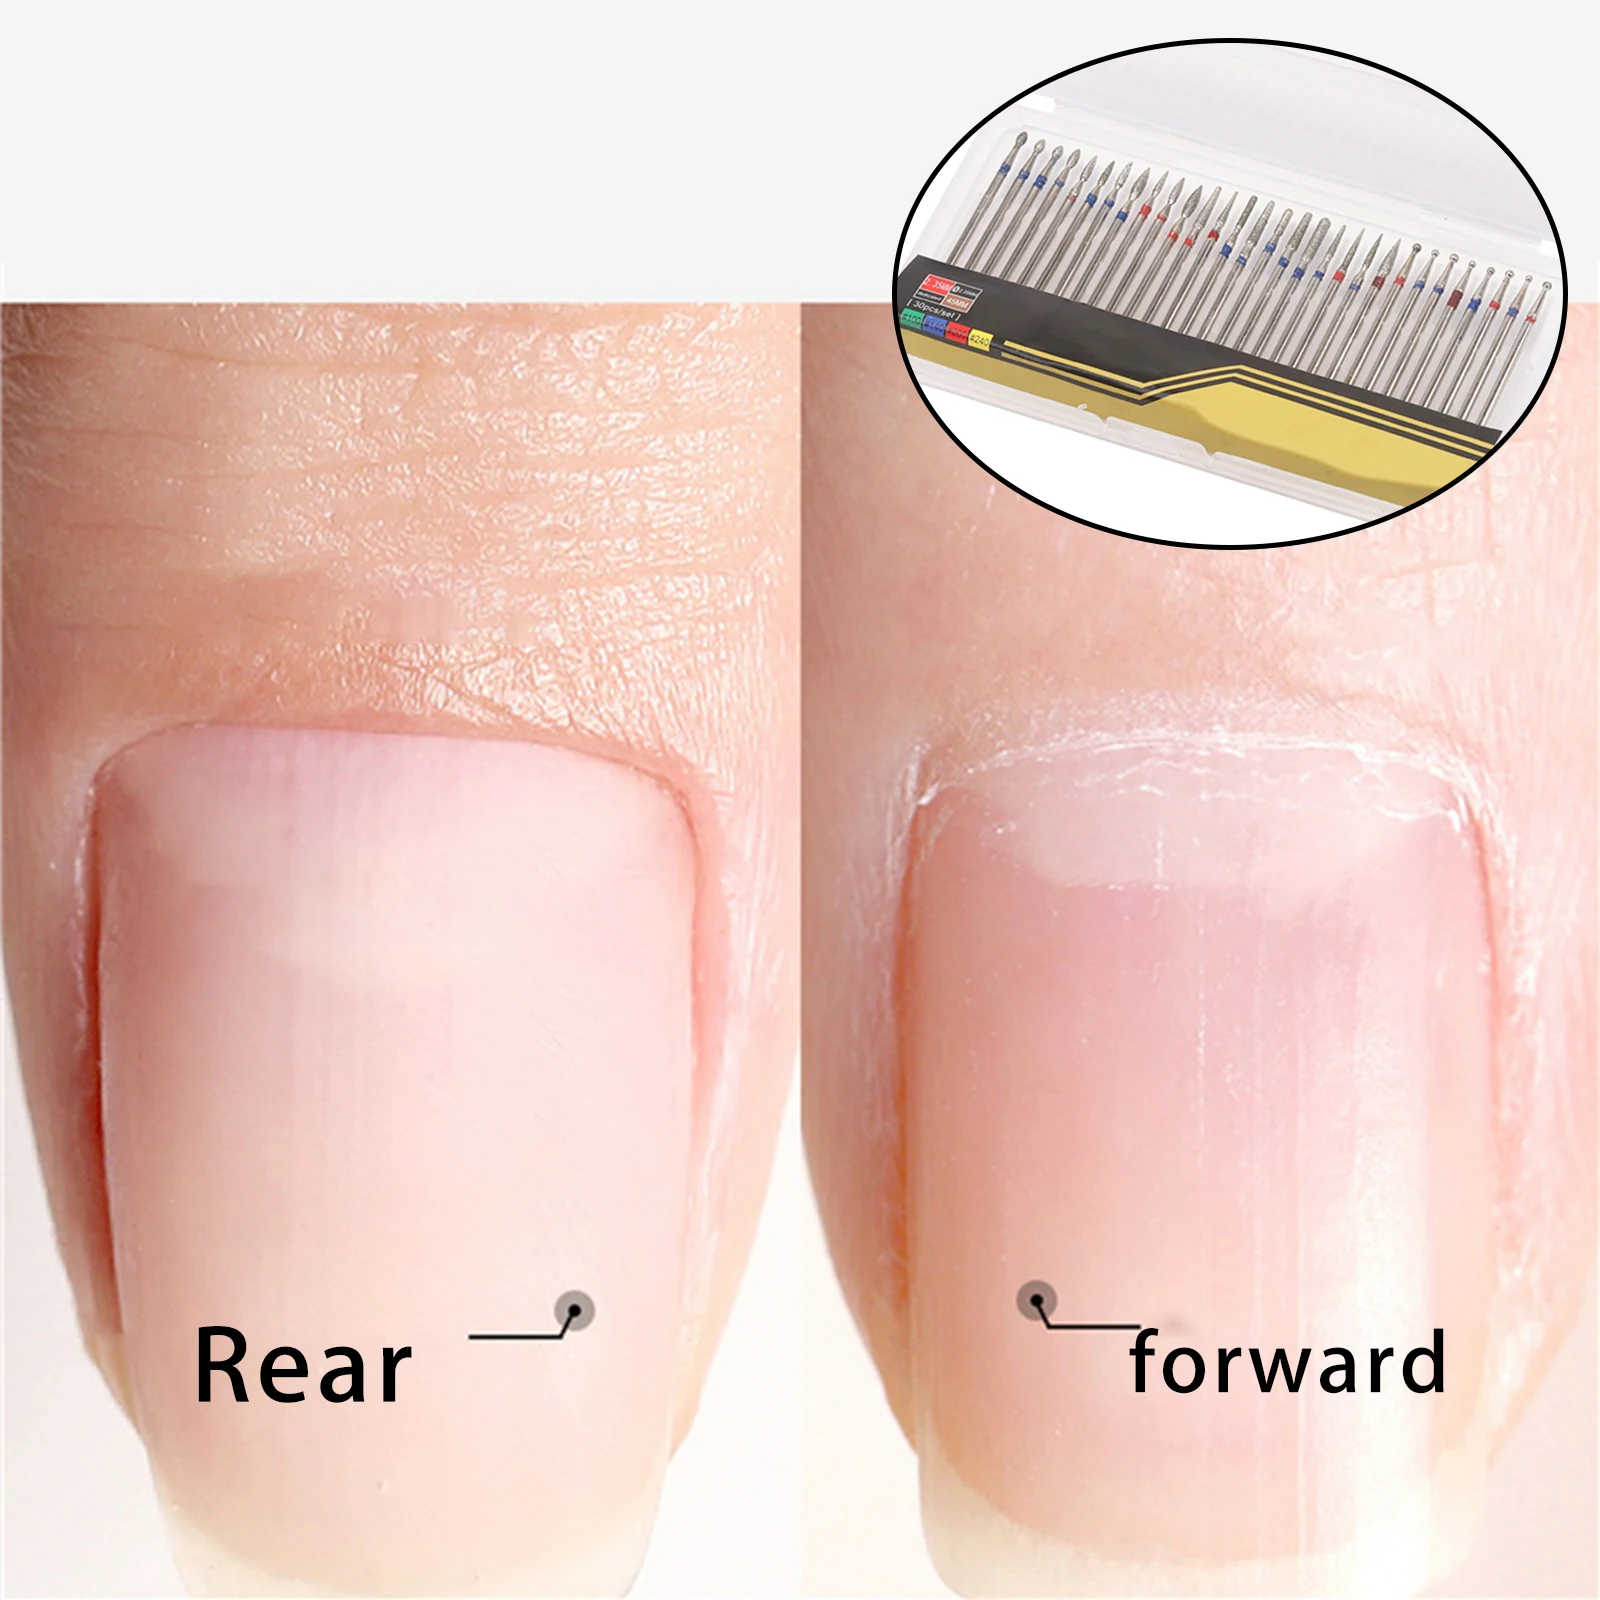 30pcs Nail Drill Bits Kits for Remove Polishing Poly Acrylic Nails Cuticles Manicure Home Use Spa Professional